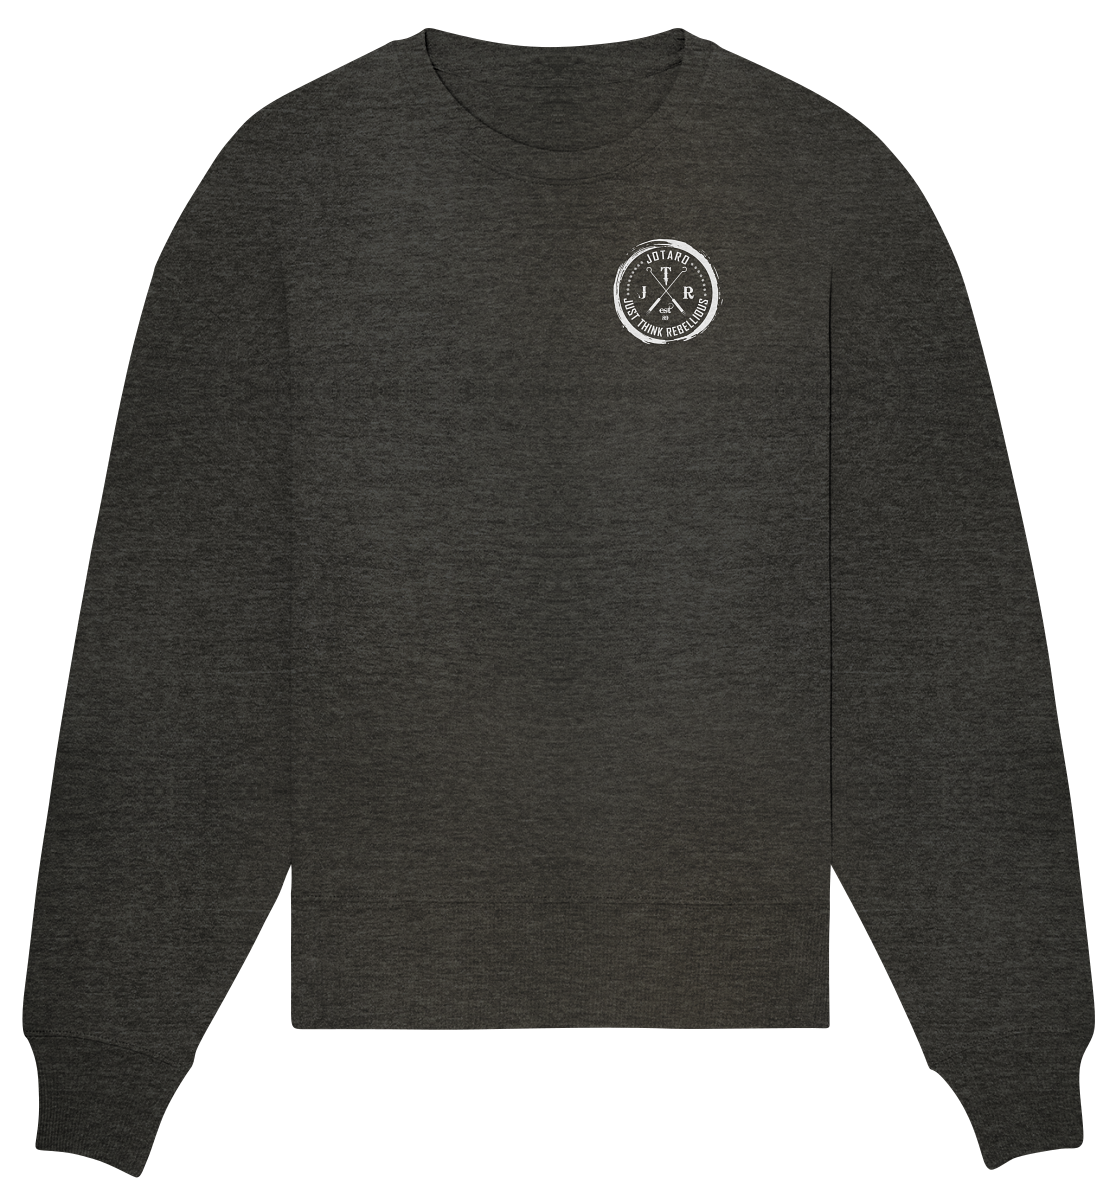 JTR Basics - Organic Oversize Sweatshirt